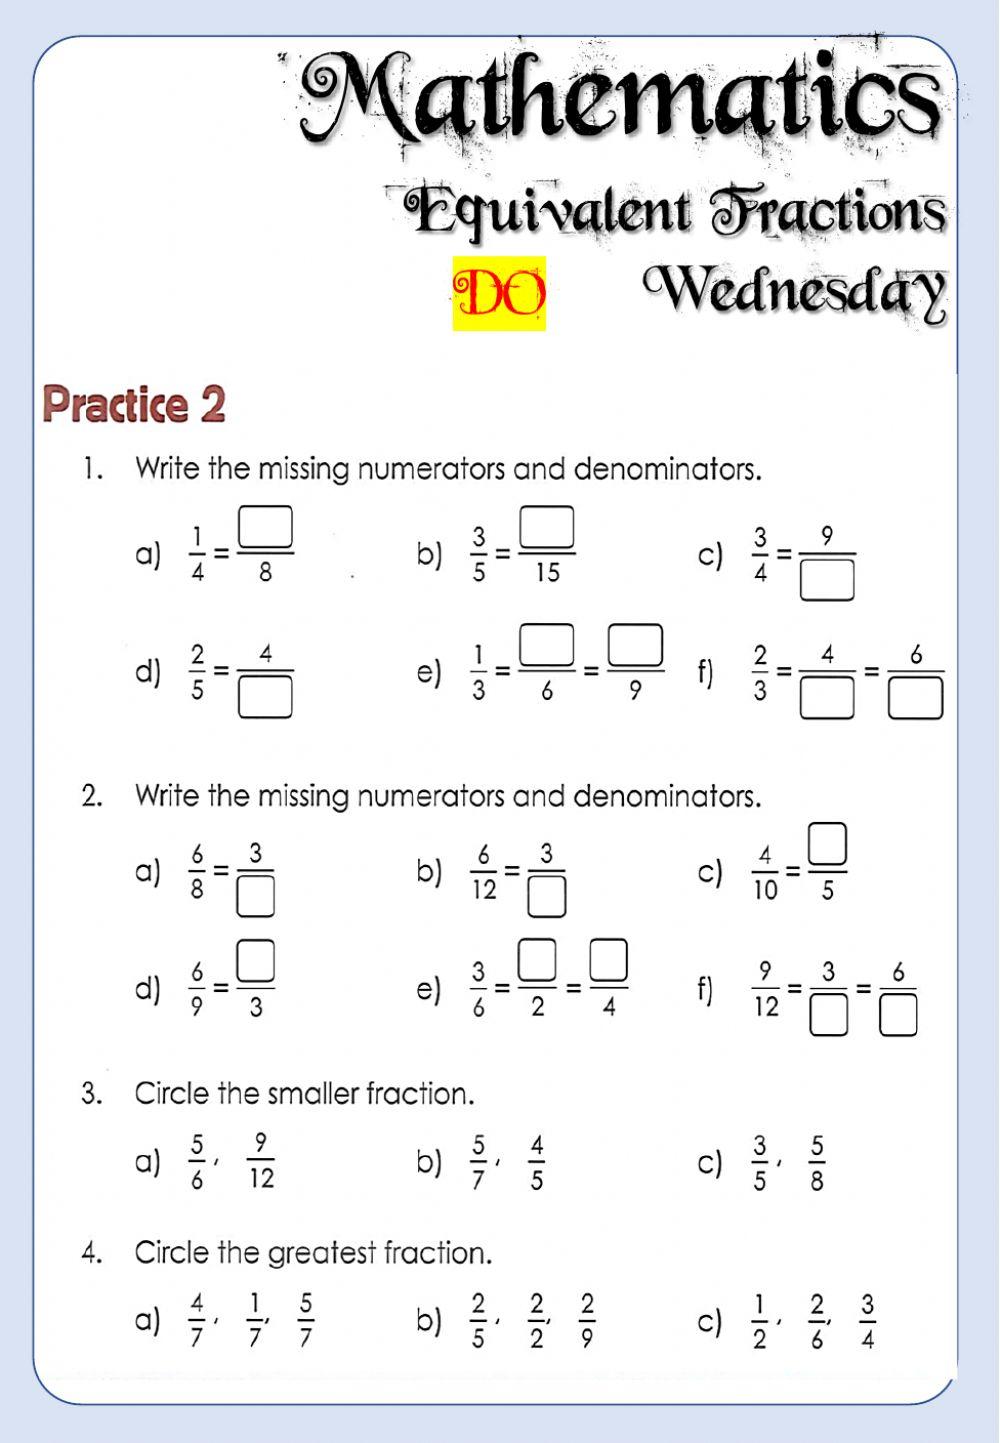 Week 16 - Wednesday - Maths - Fractions